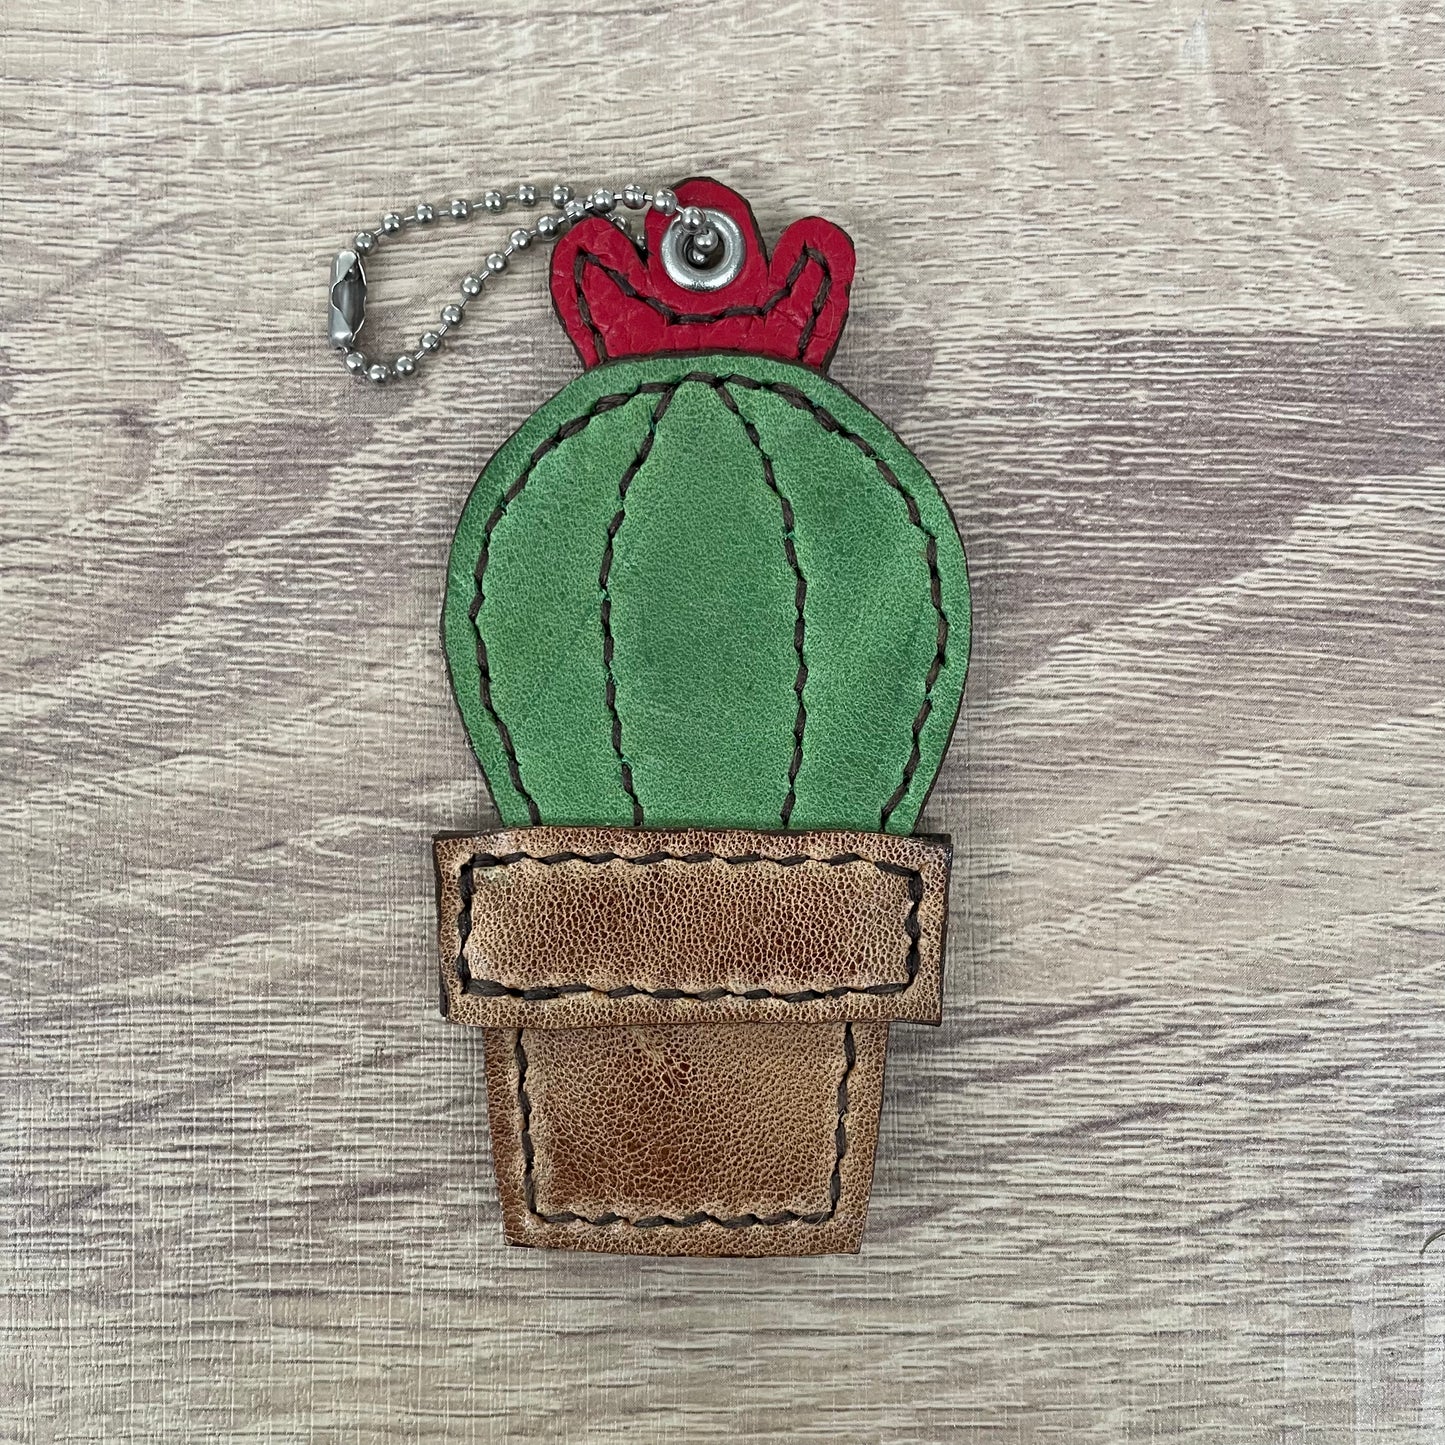 Cactus Hand-Stitched Keychain Charm Ornament